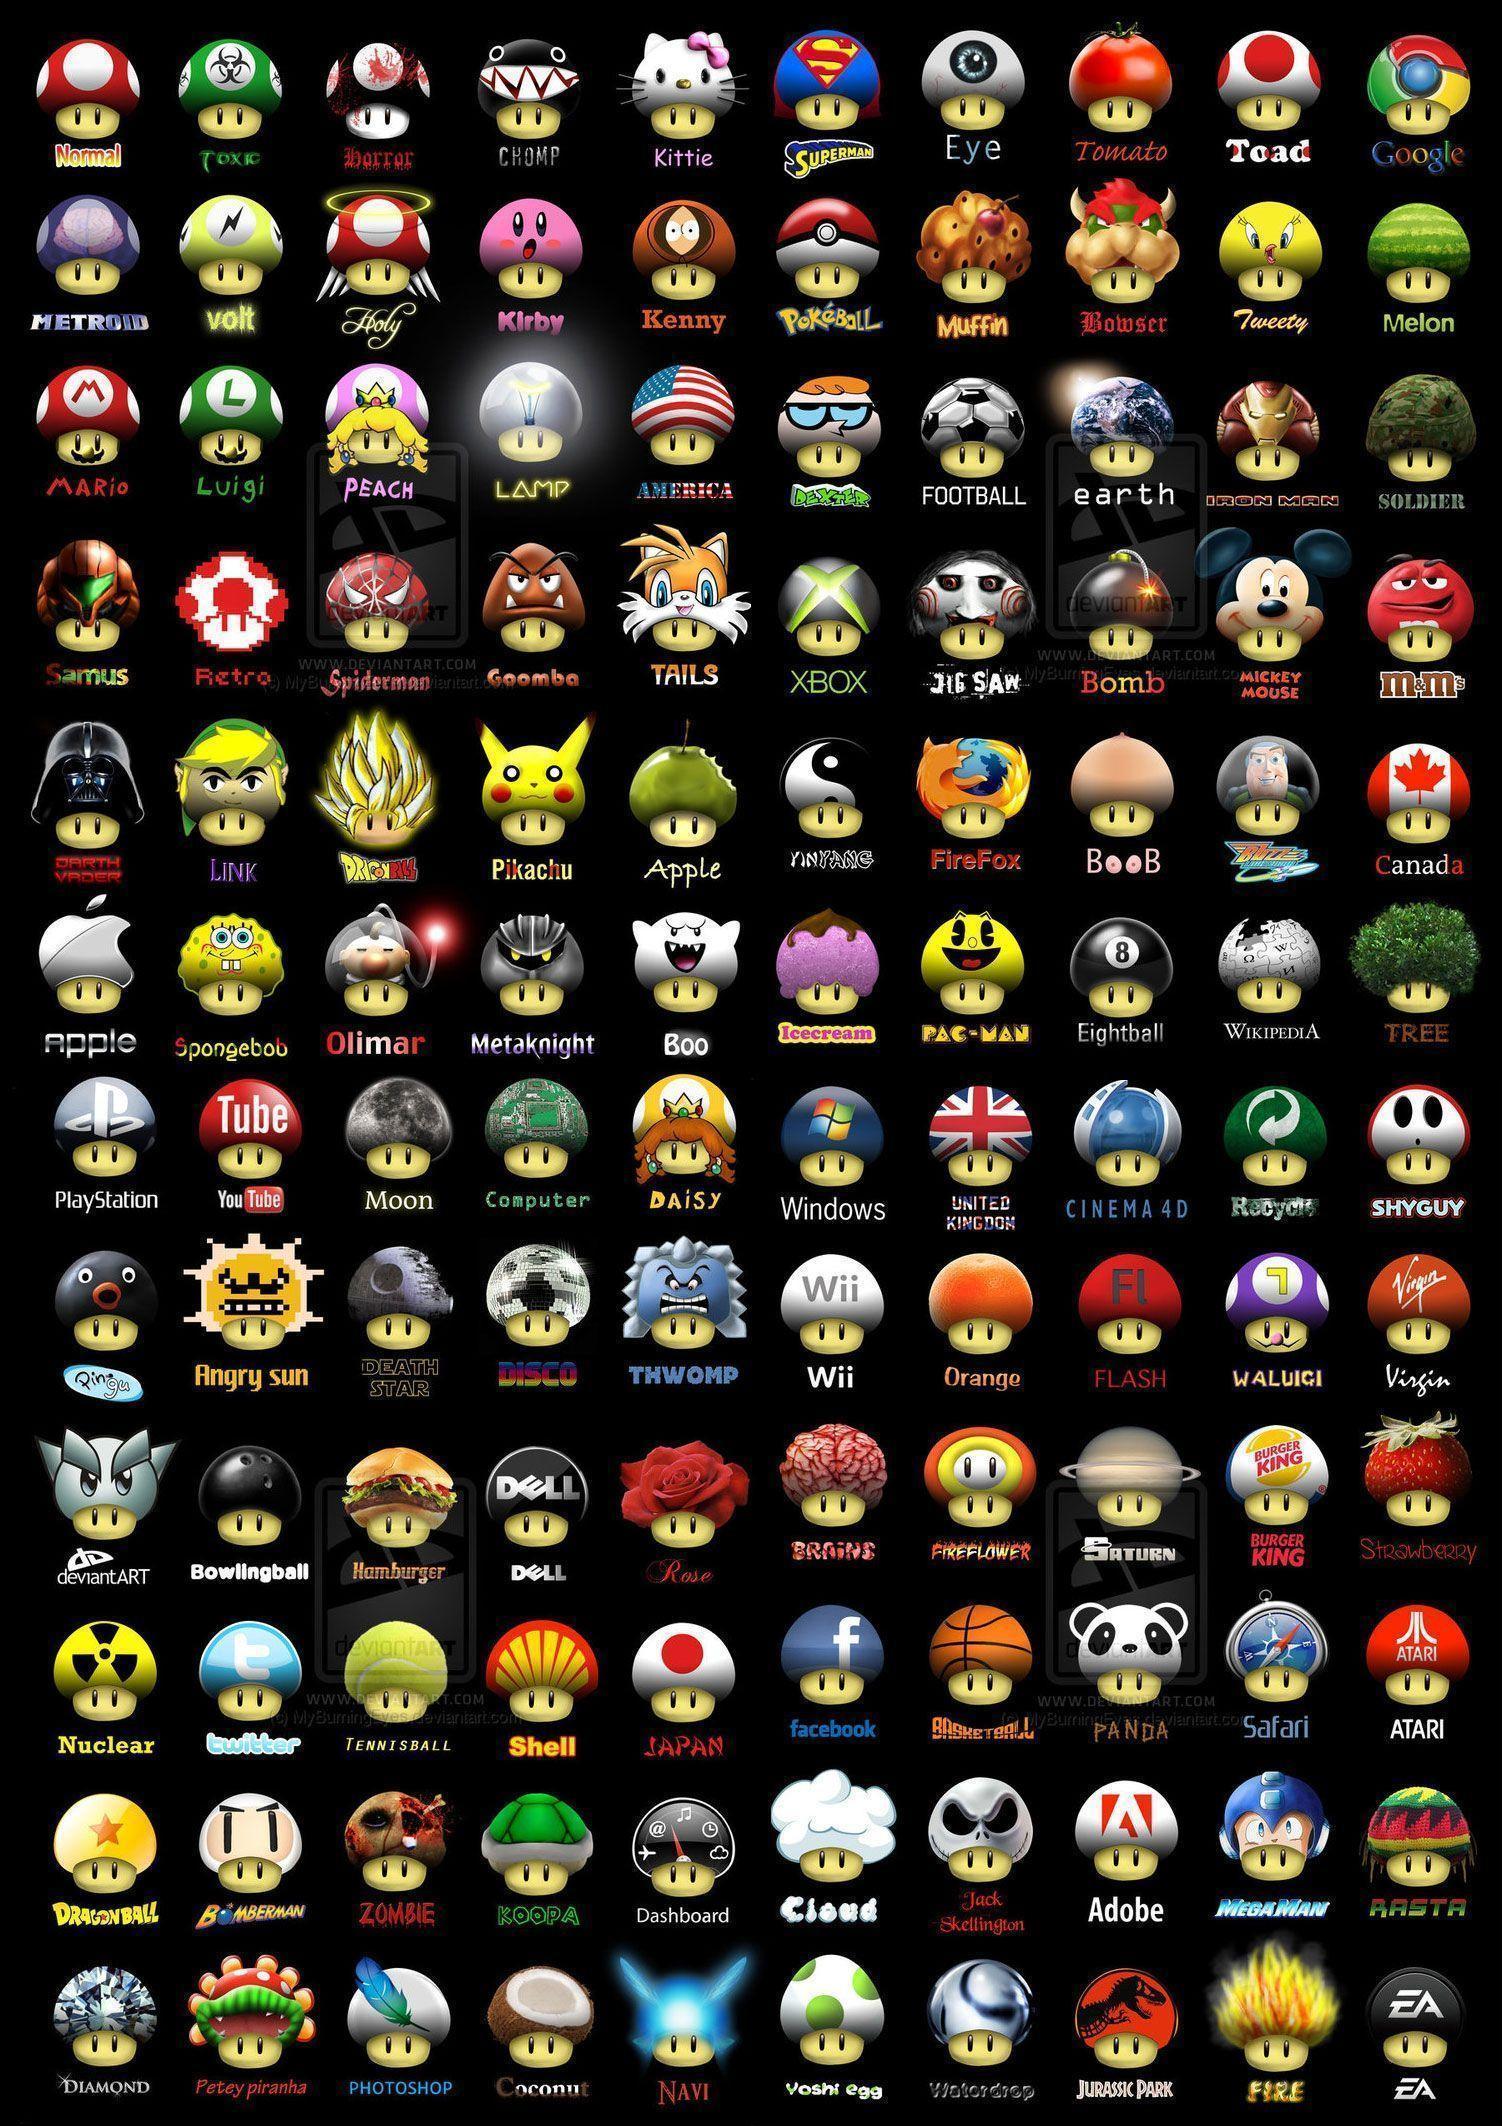 Different kinds of mushrooms Mario Bros. Fan Art 32419815